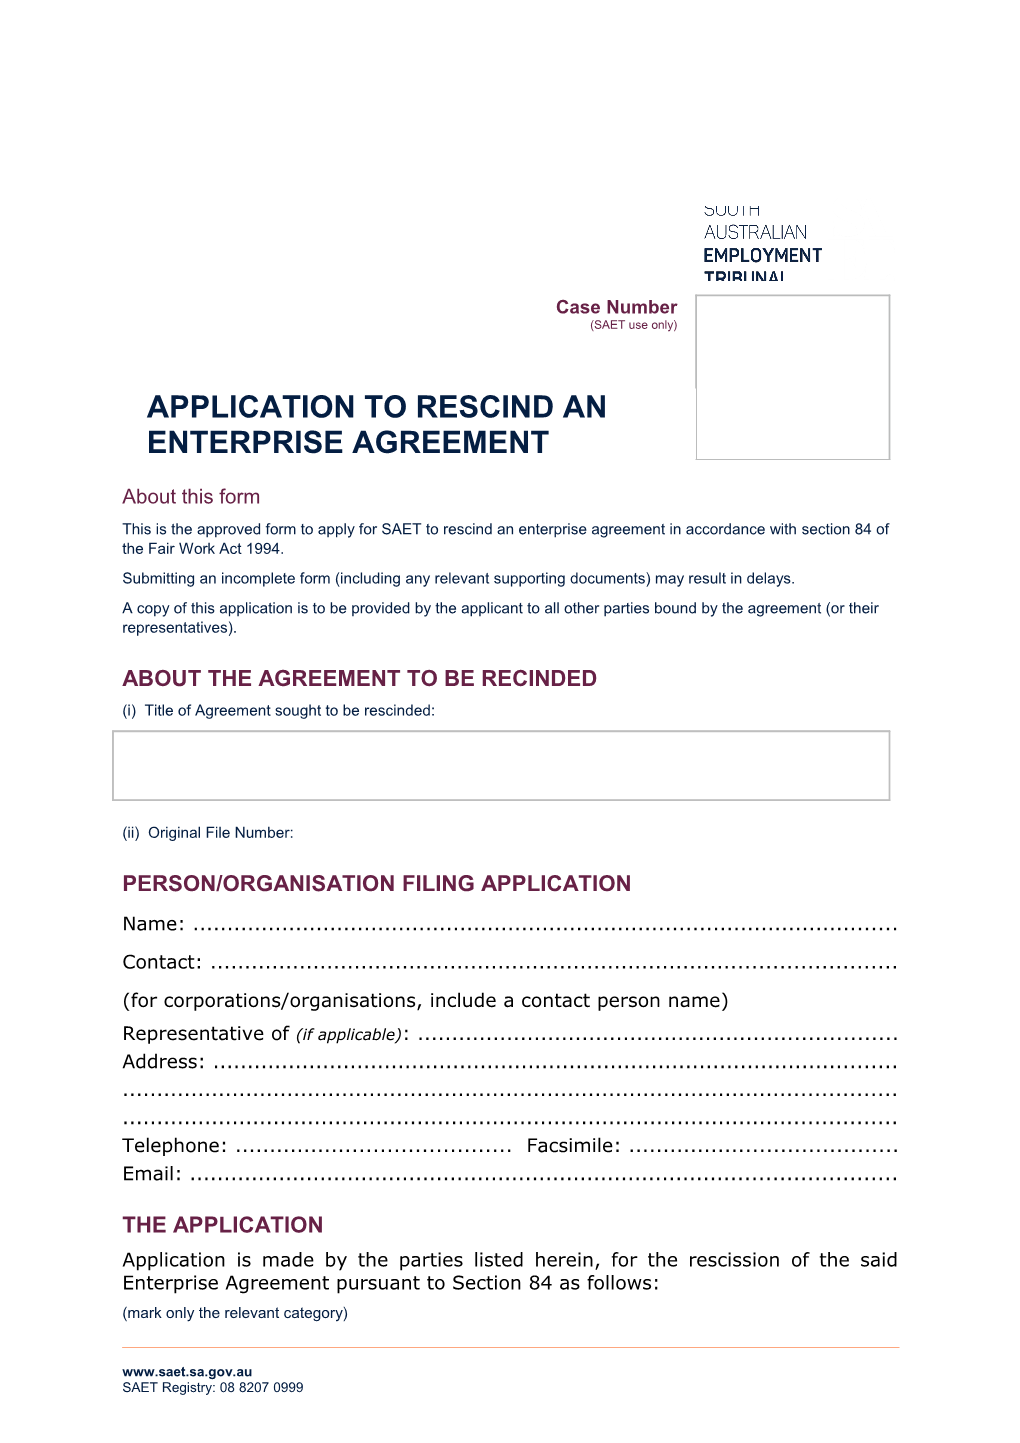 Application to RESCIND an Enterprise Agreement